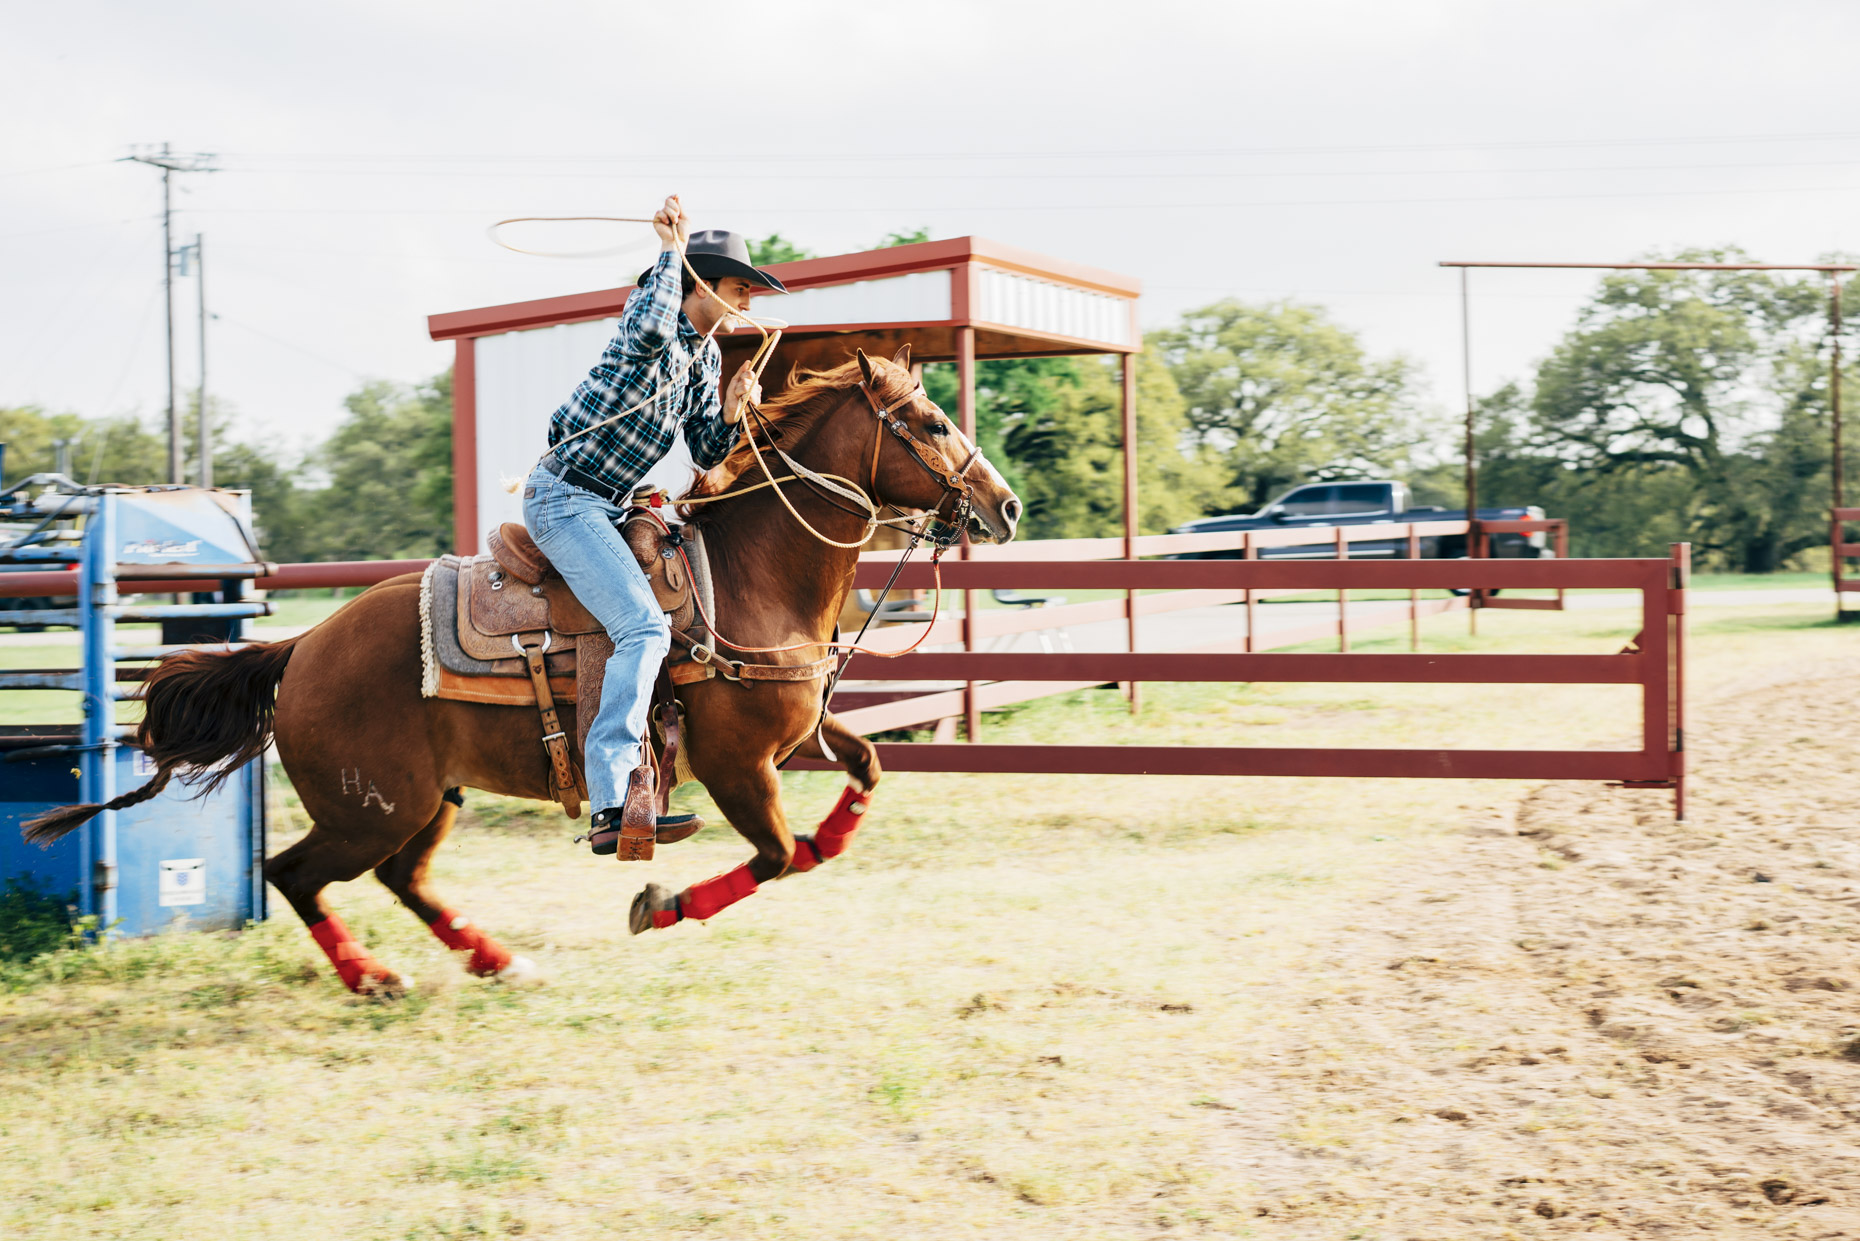 Cowboy riding horse into arena to rope calf